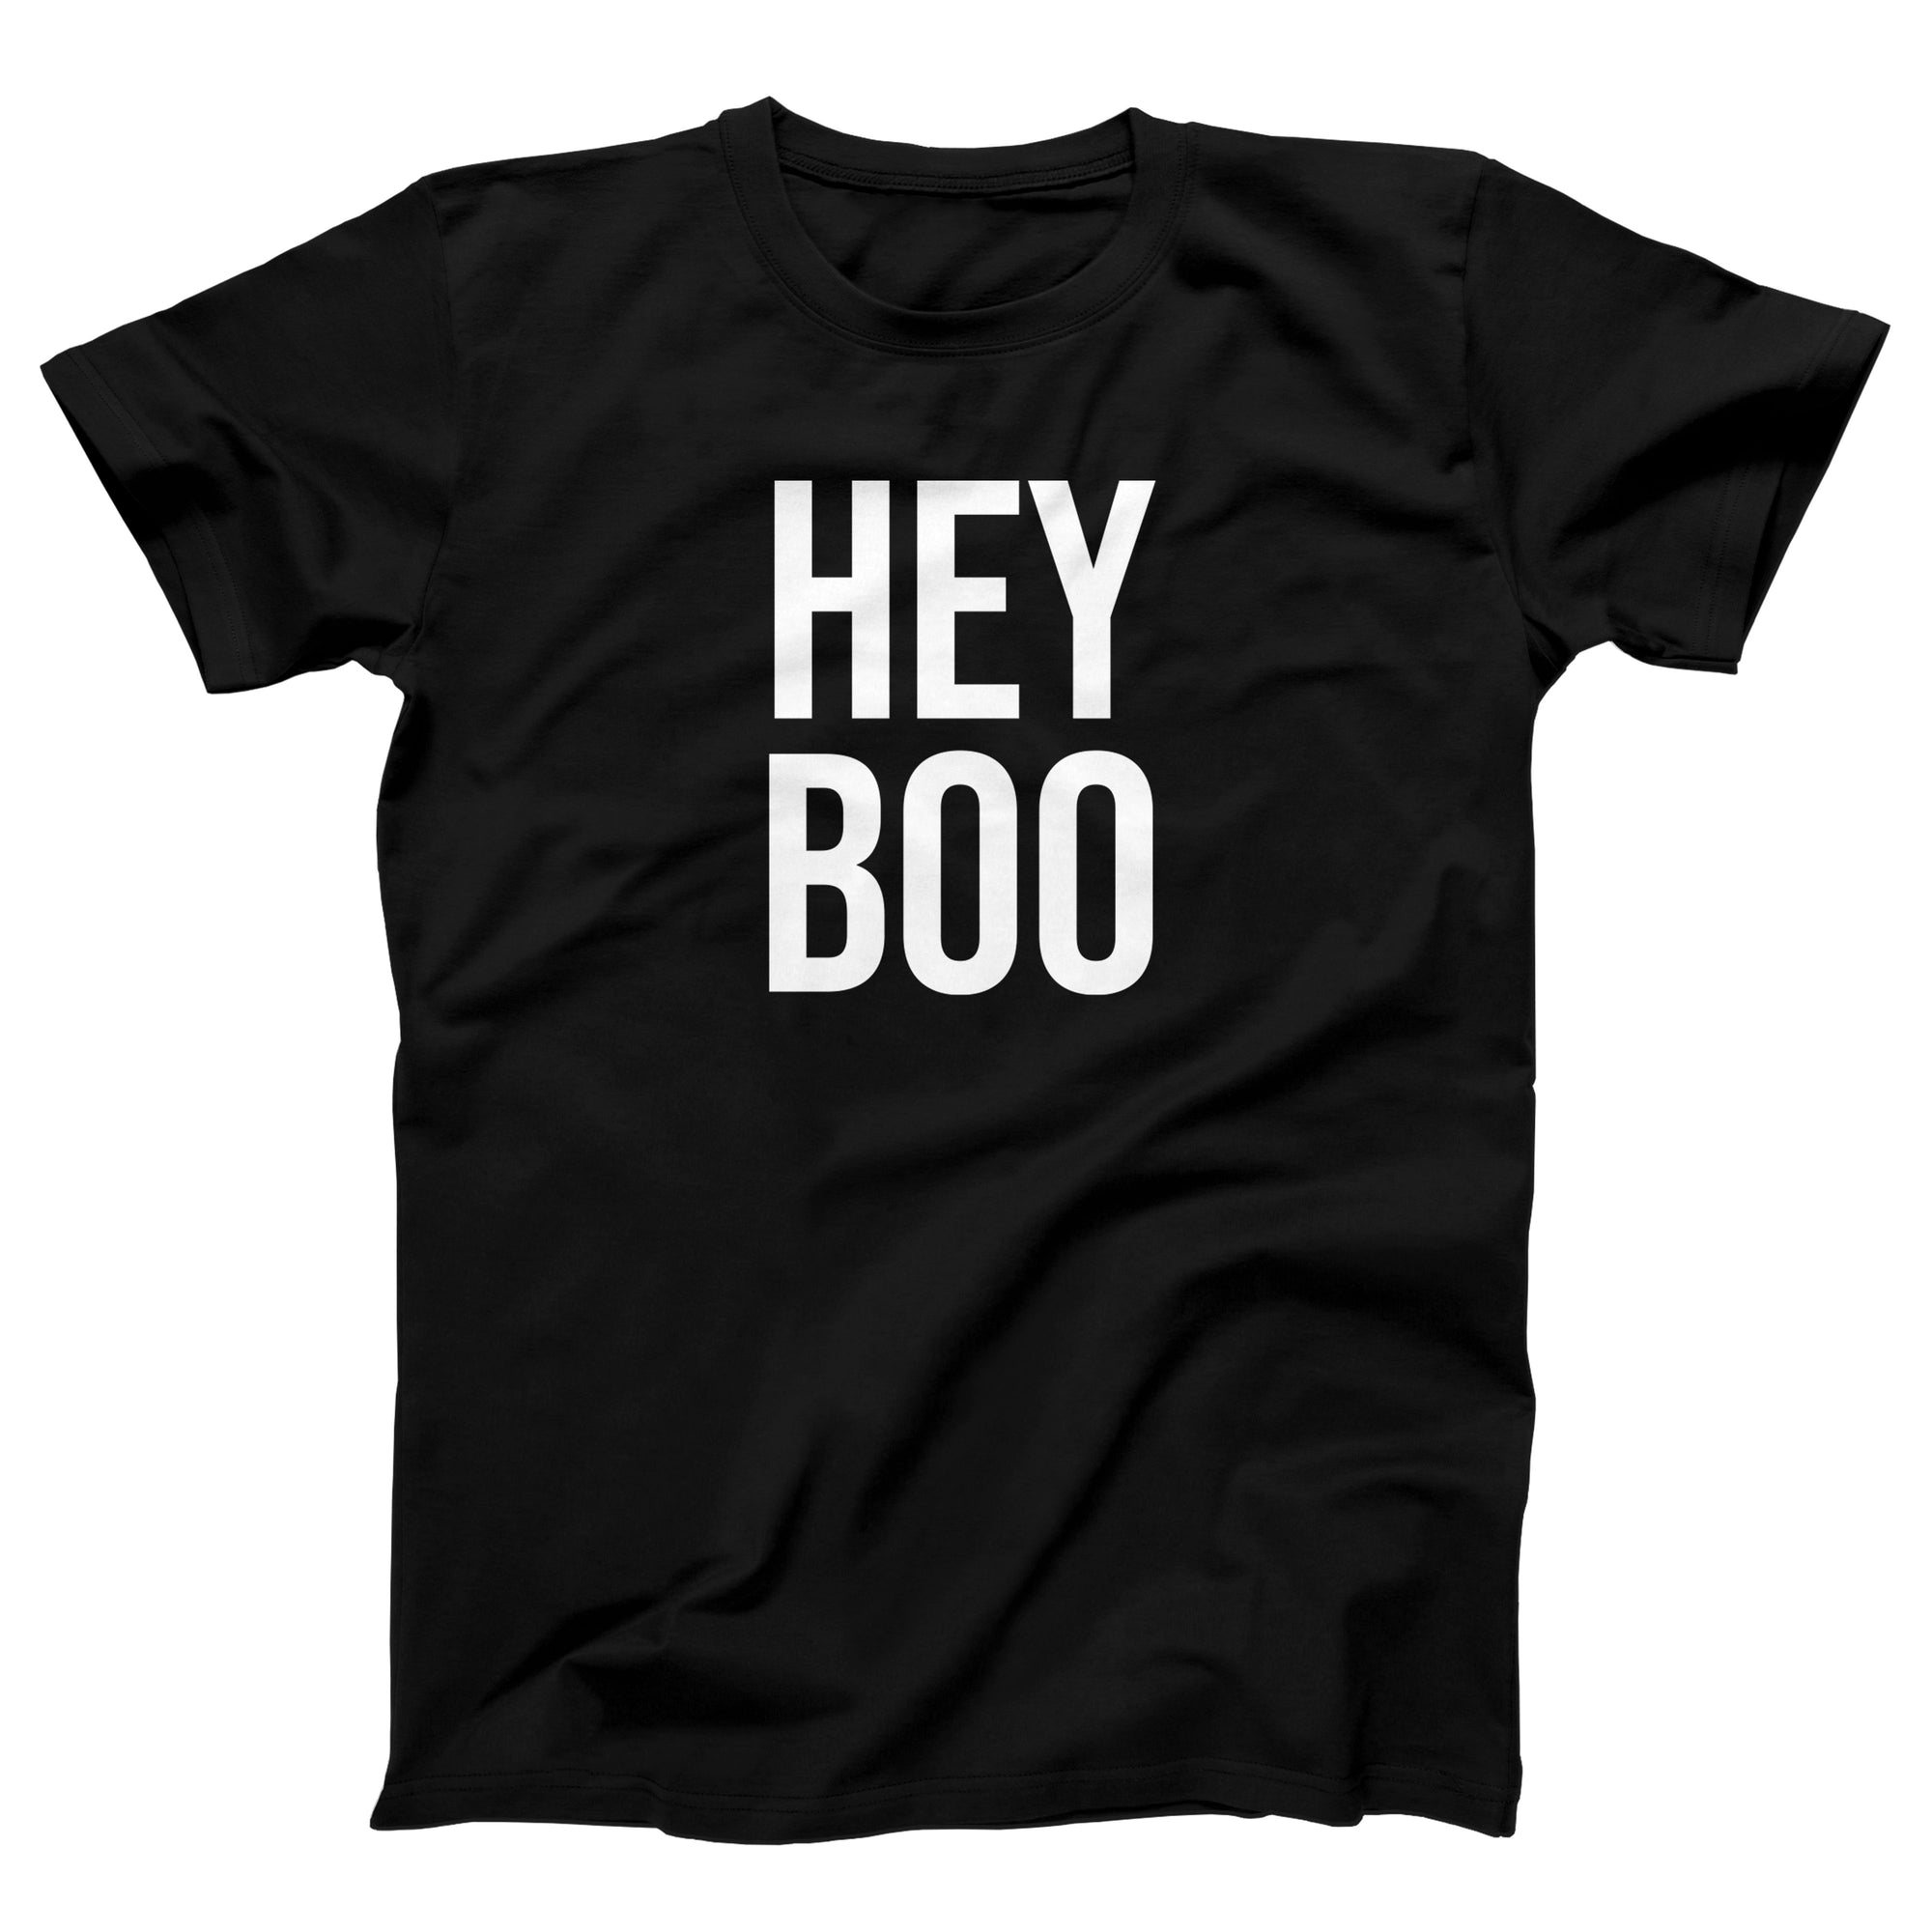 Hey Boo Adult Unisex T-Shirt